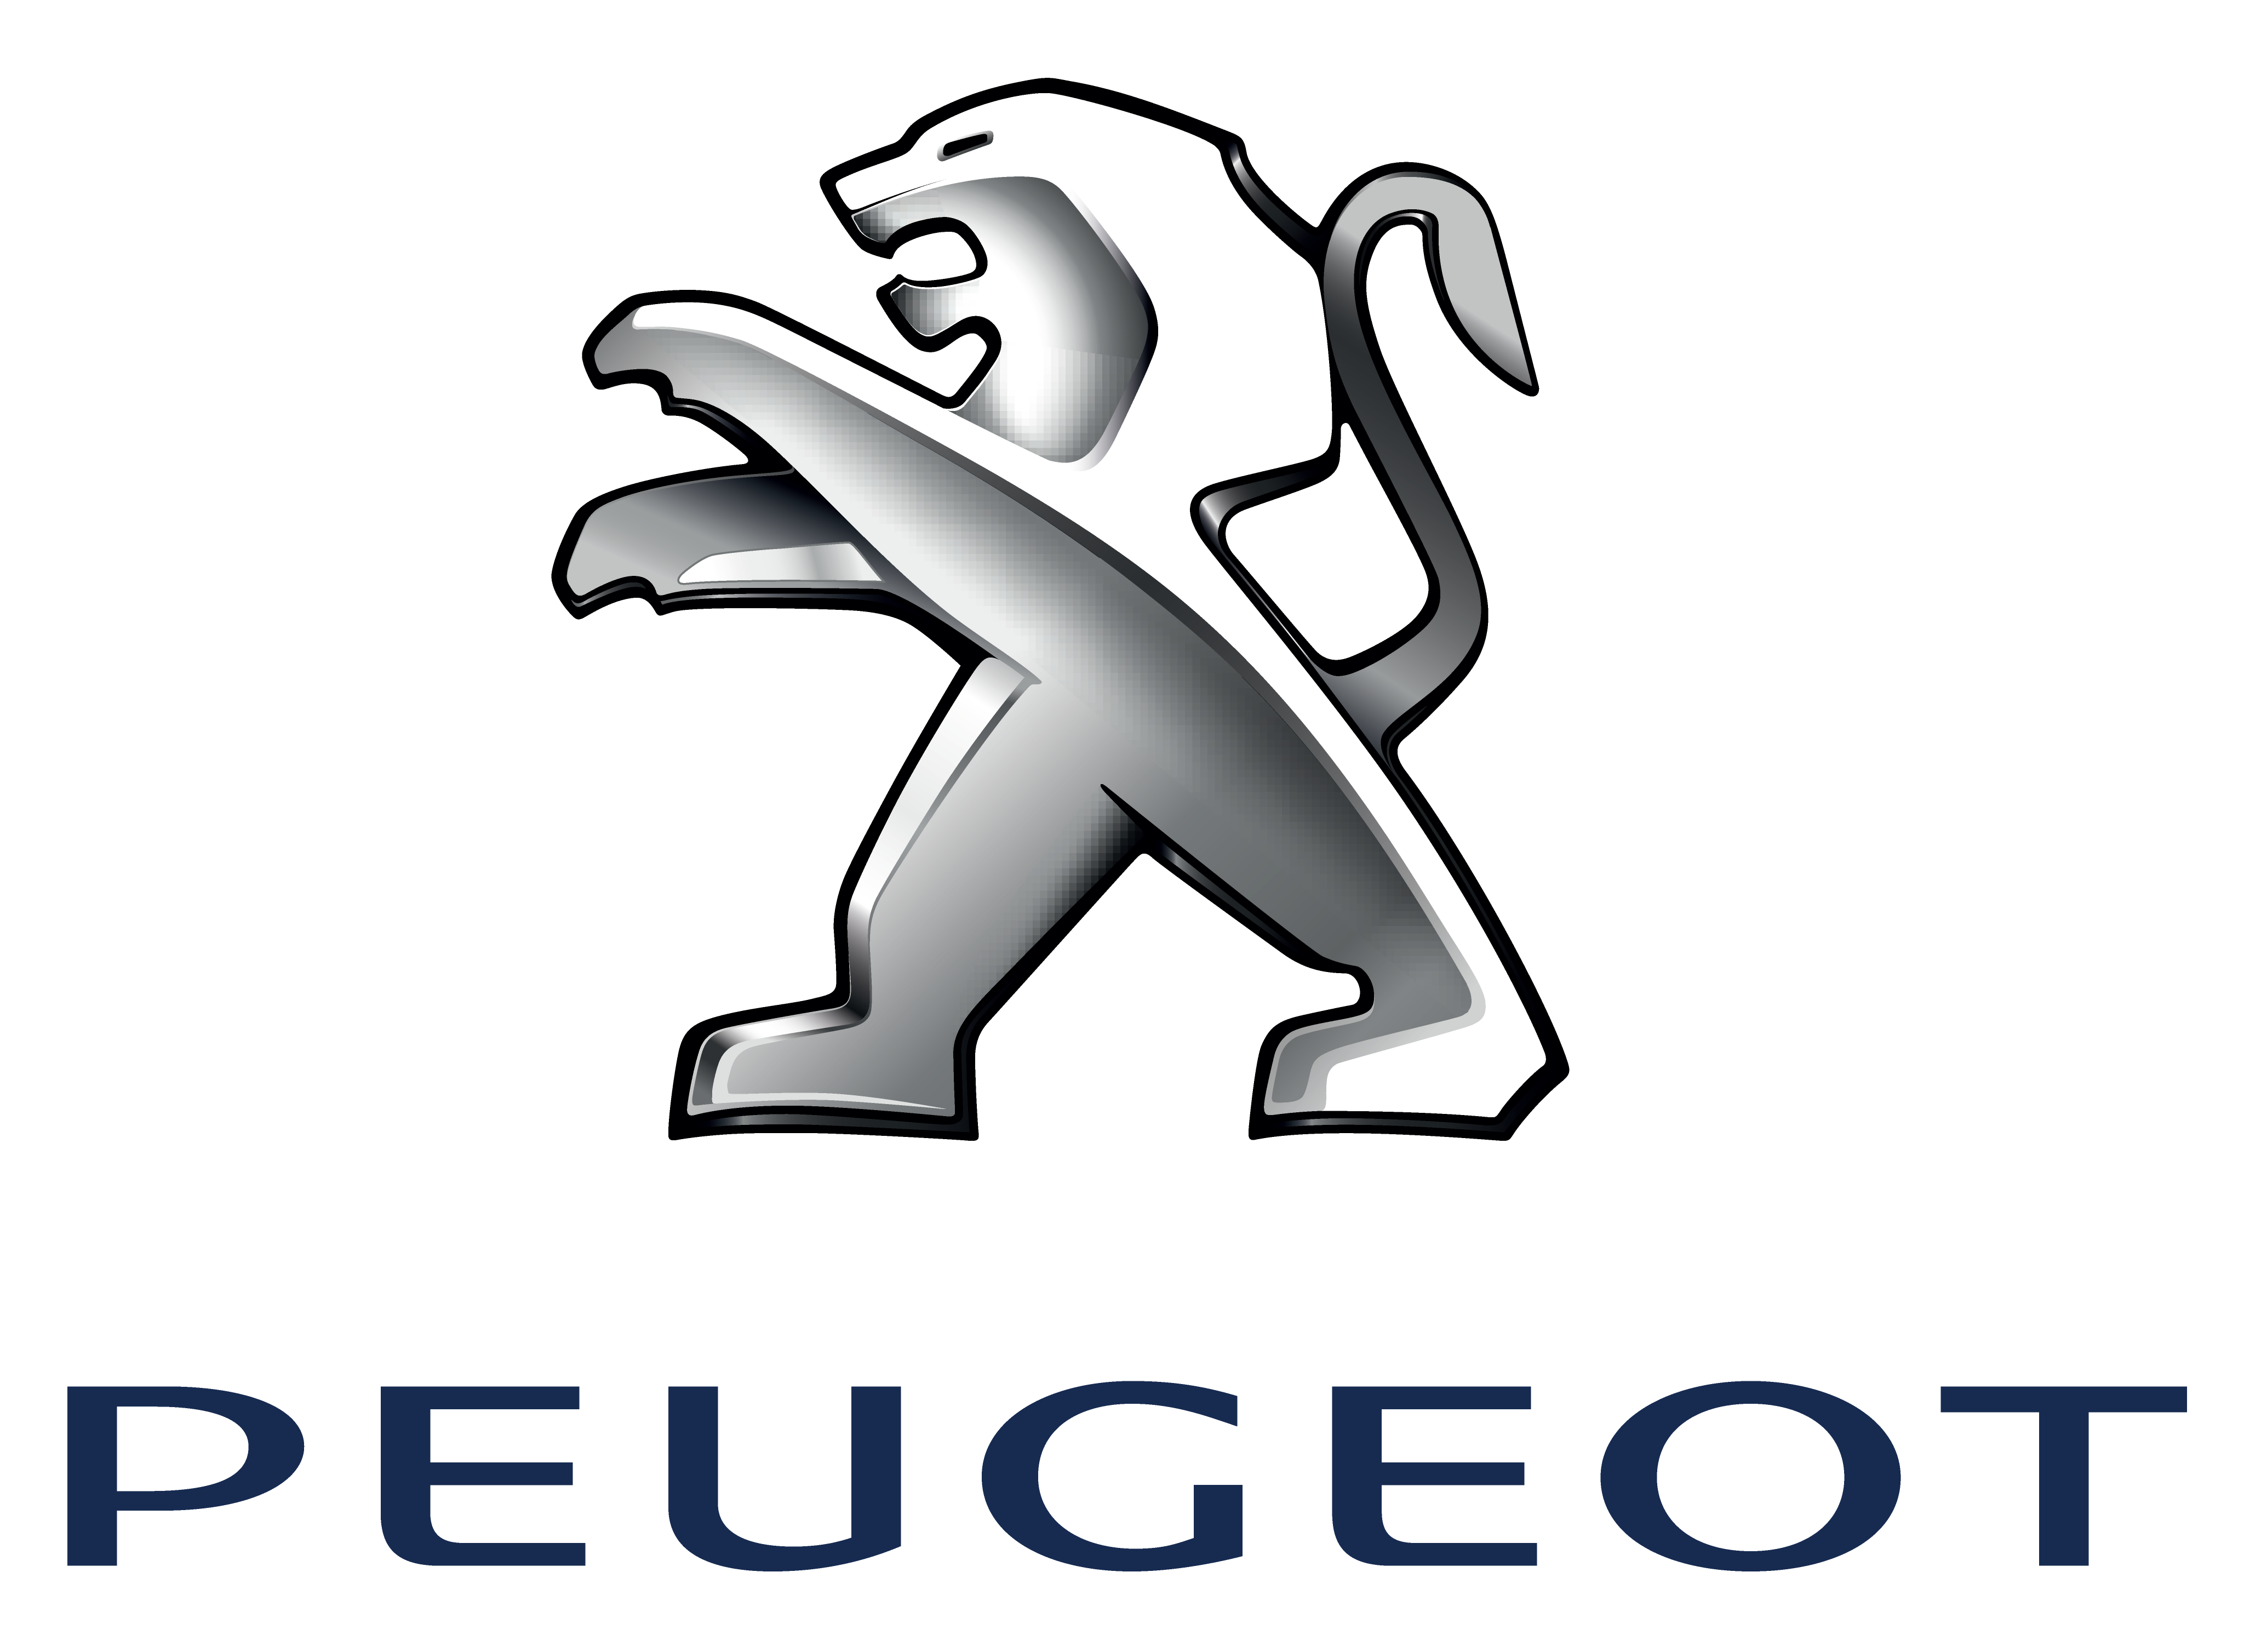 Peugeot Logo - Png And Vector - Logo Download, Peugeot Logo PNG - Free PNG